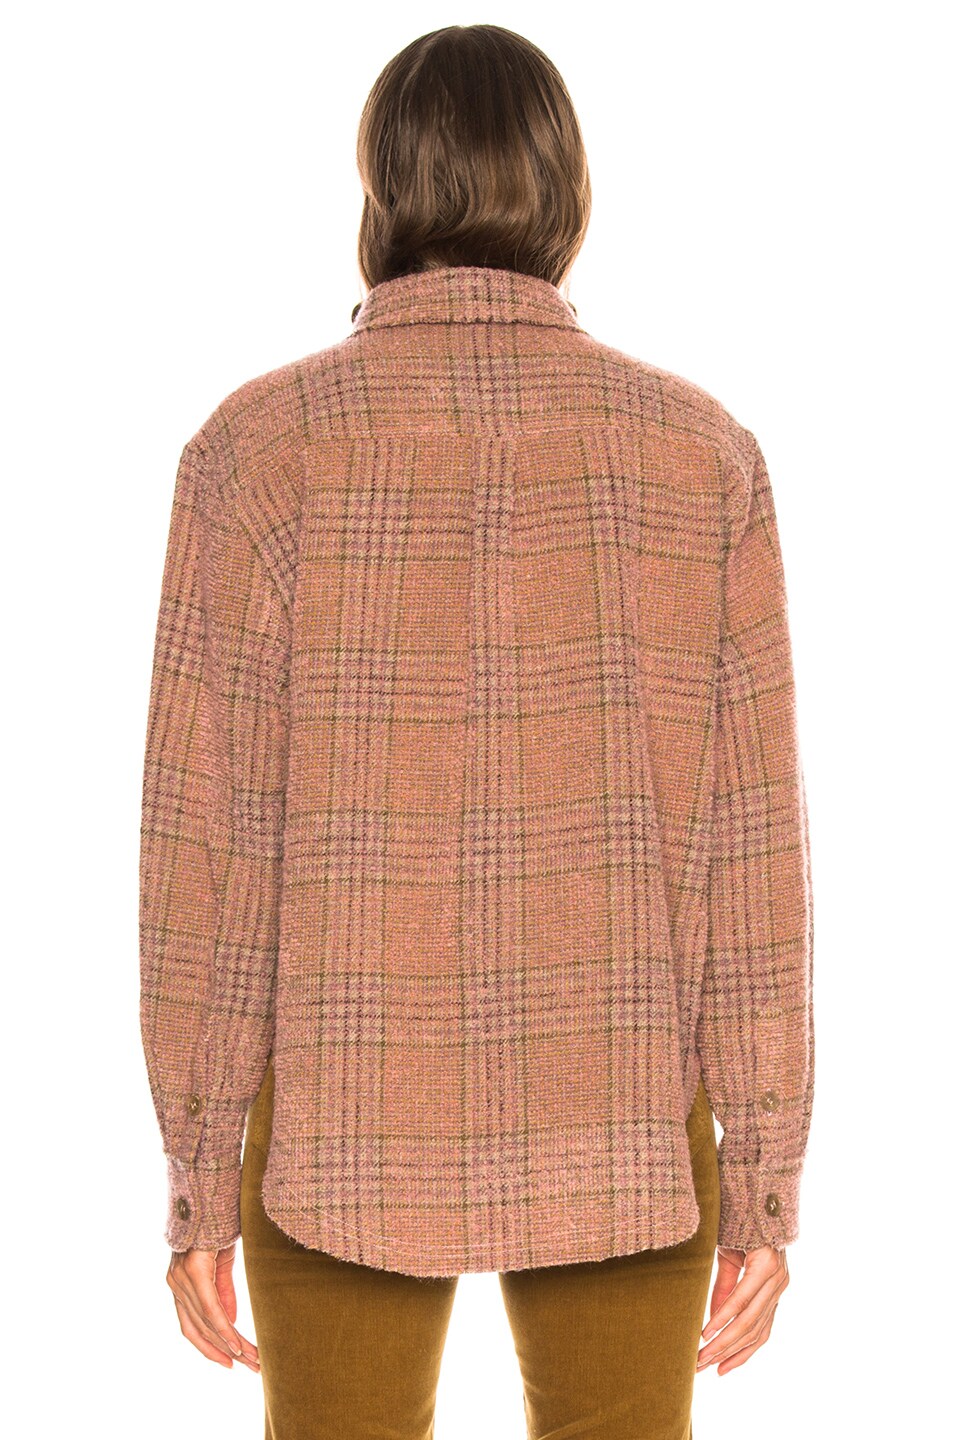 Acne Studios Plaid Fannel Shirt in Pink & Brown | FWRD